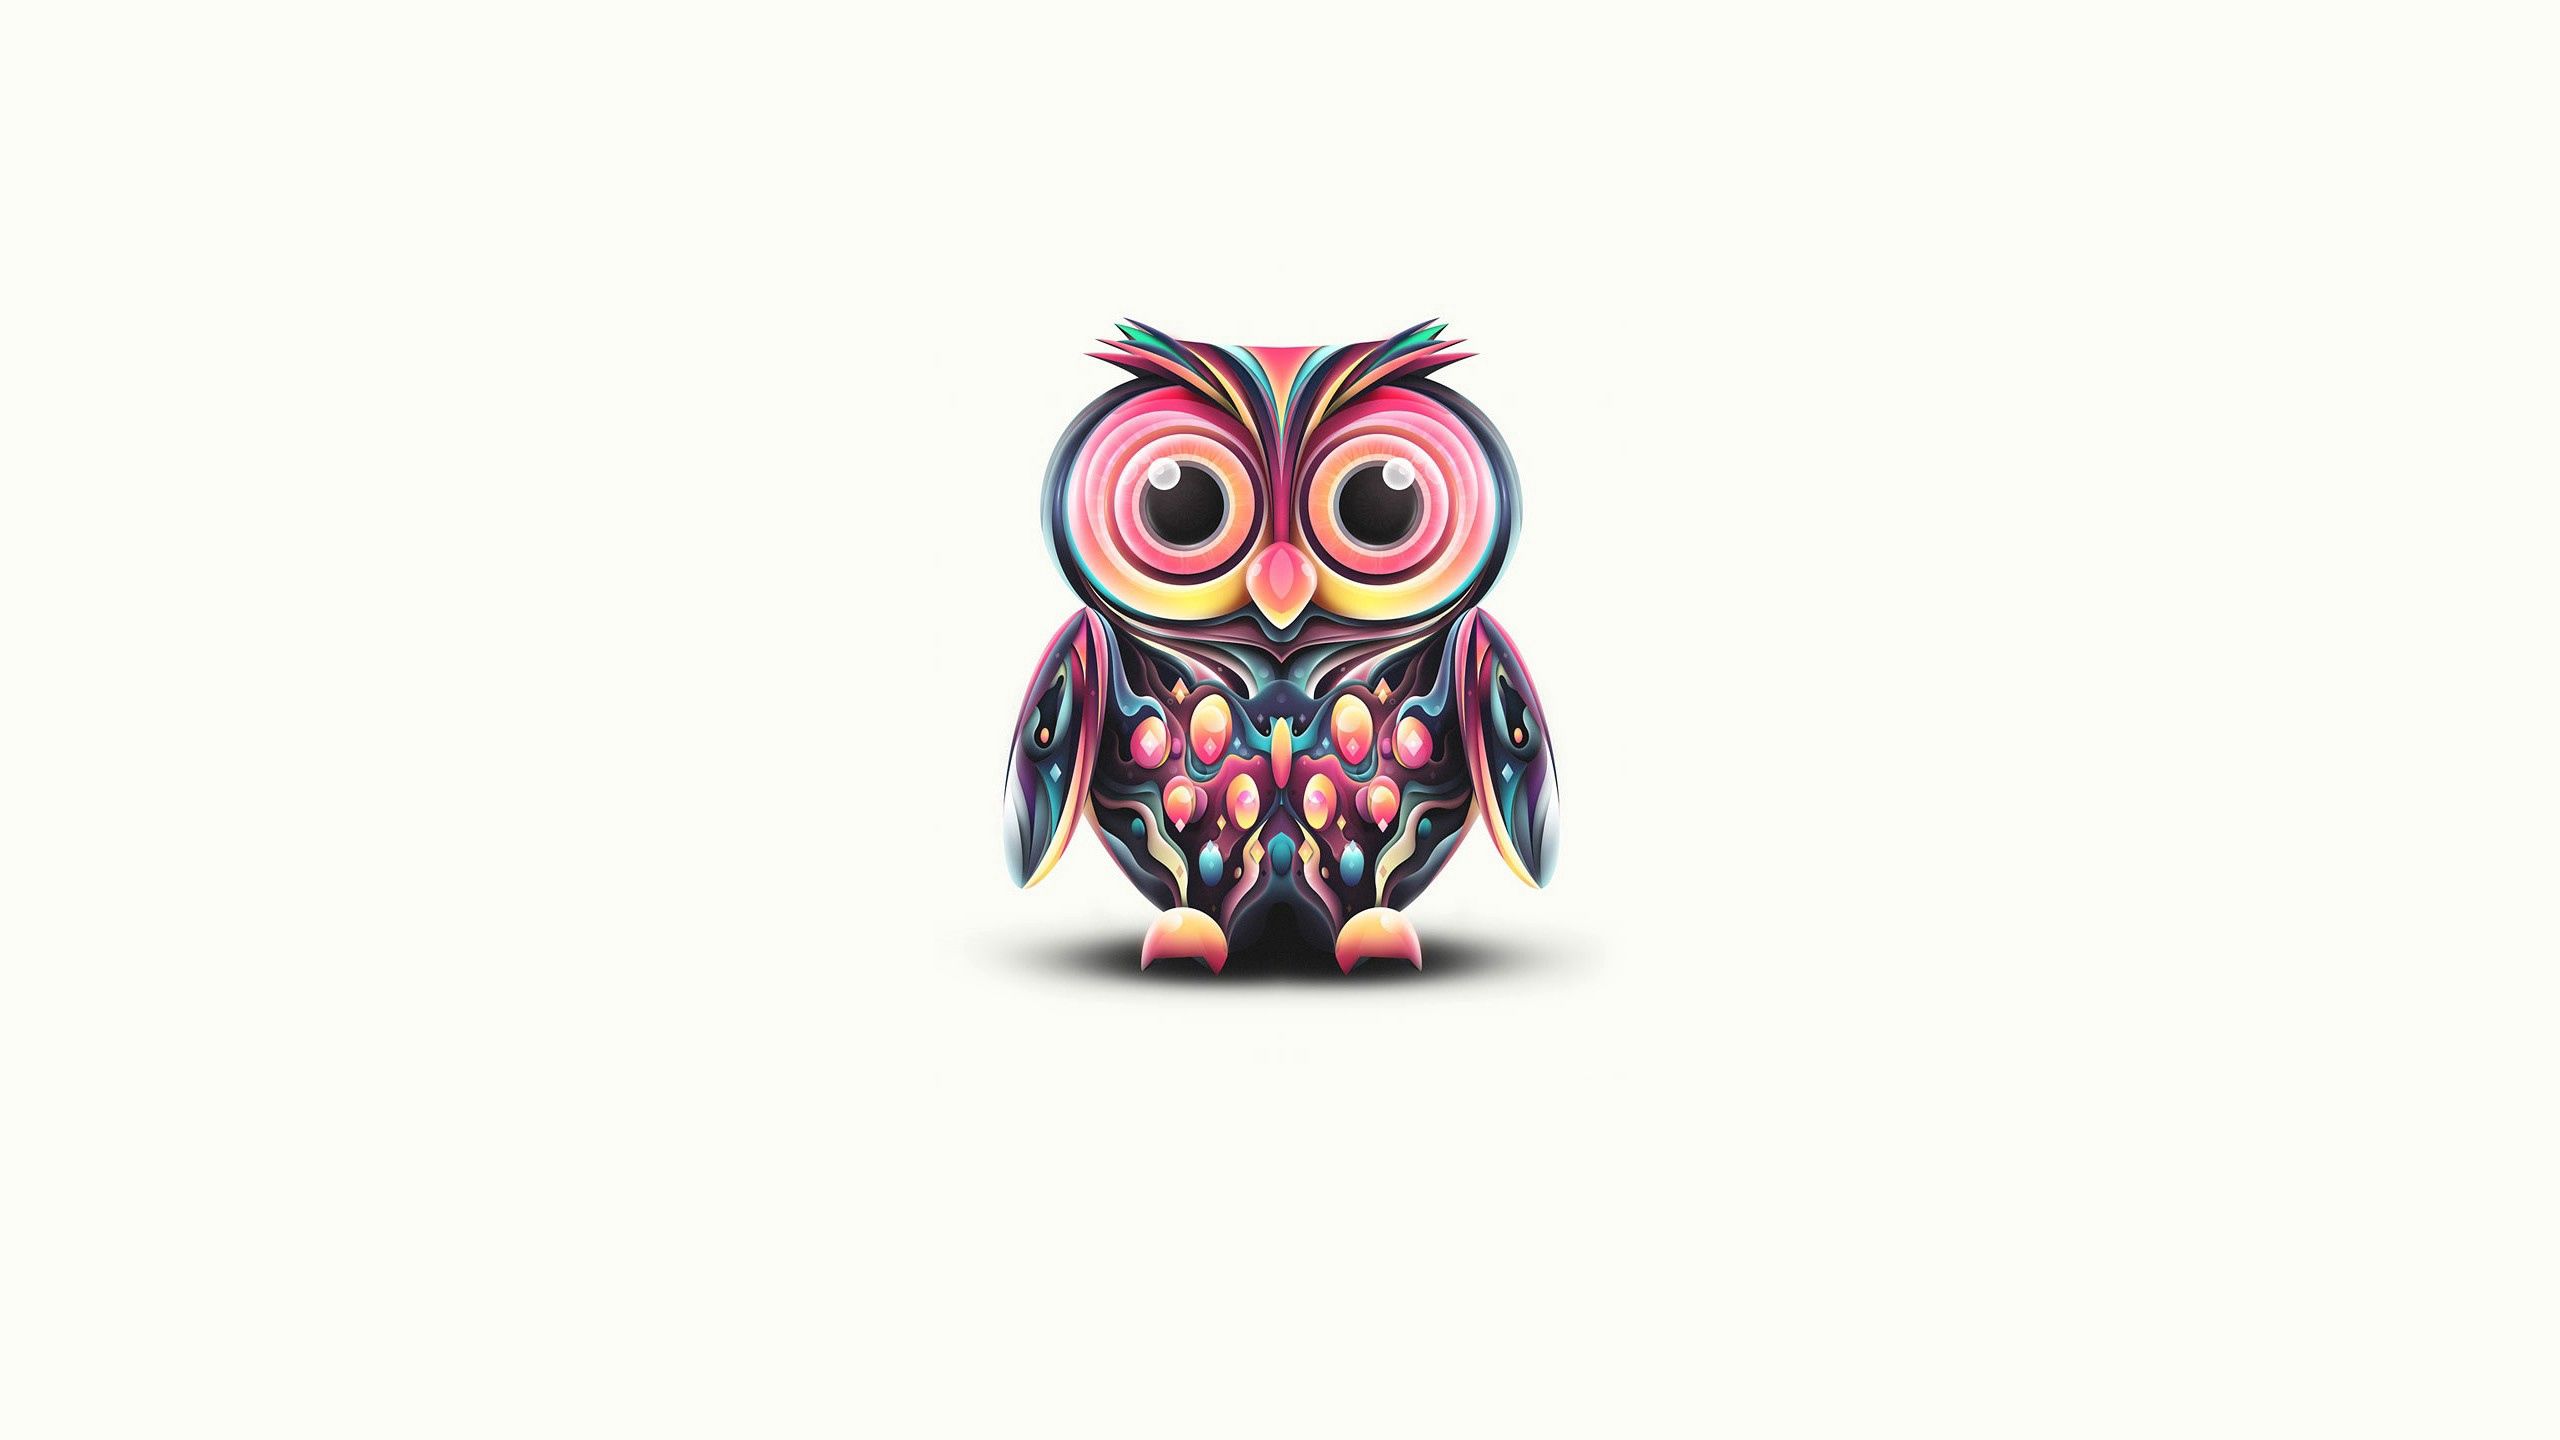 1080p Wallpaper  Owl